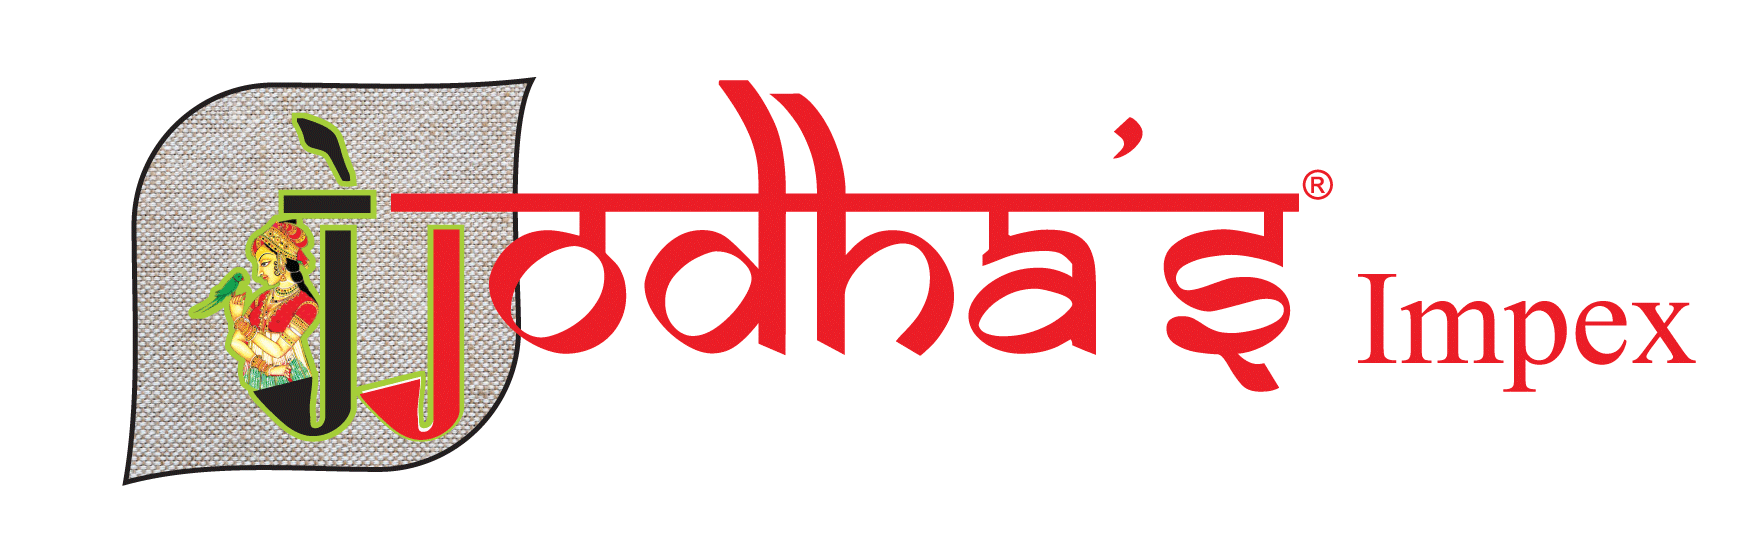 jjodhas-logo